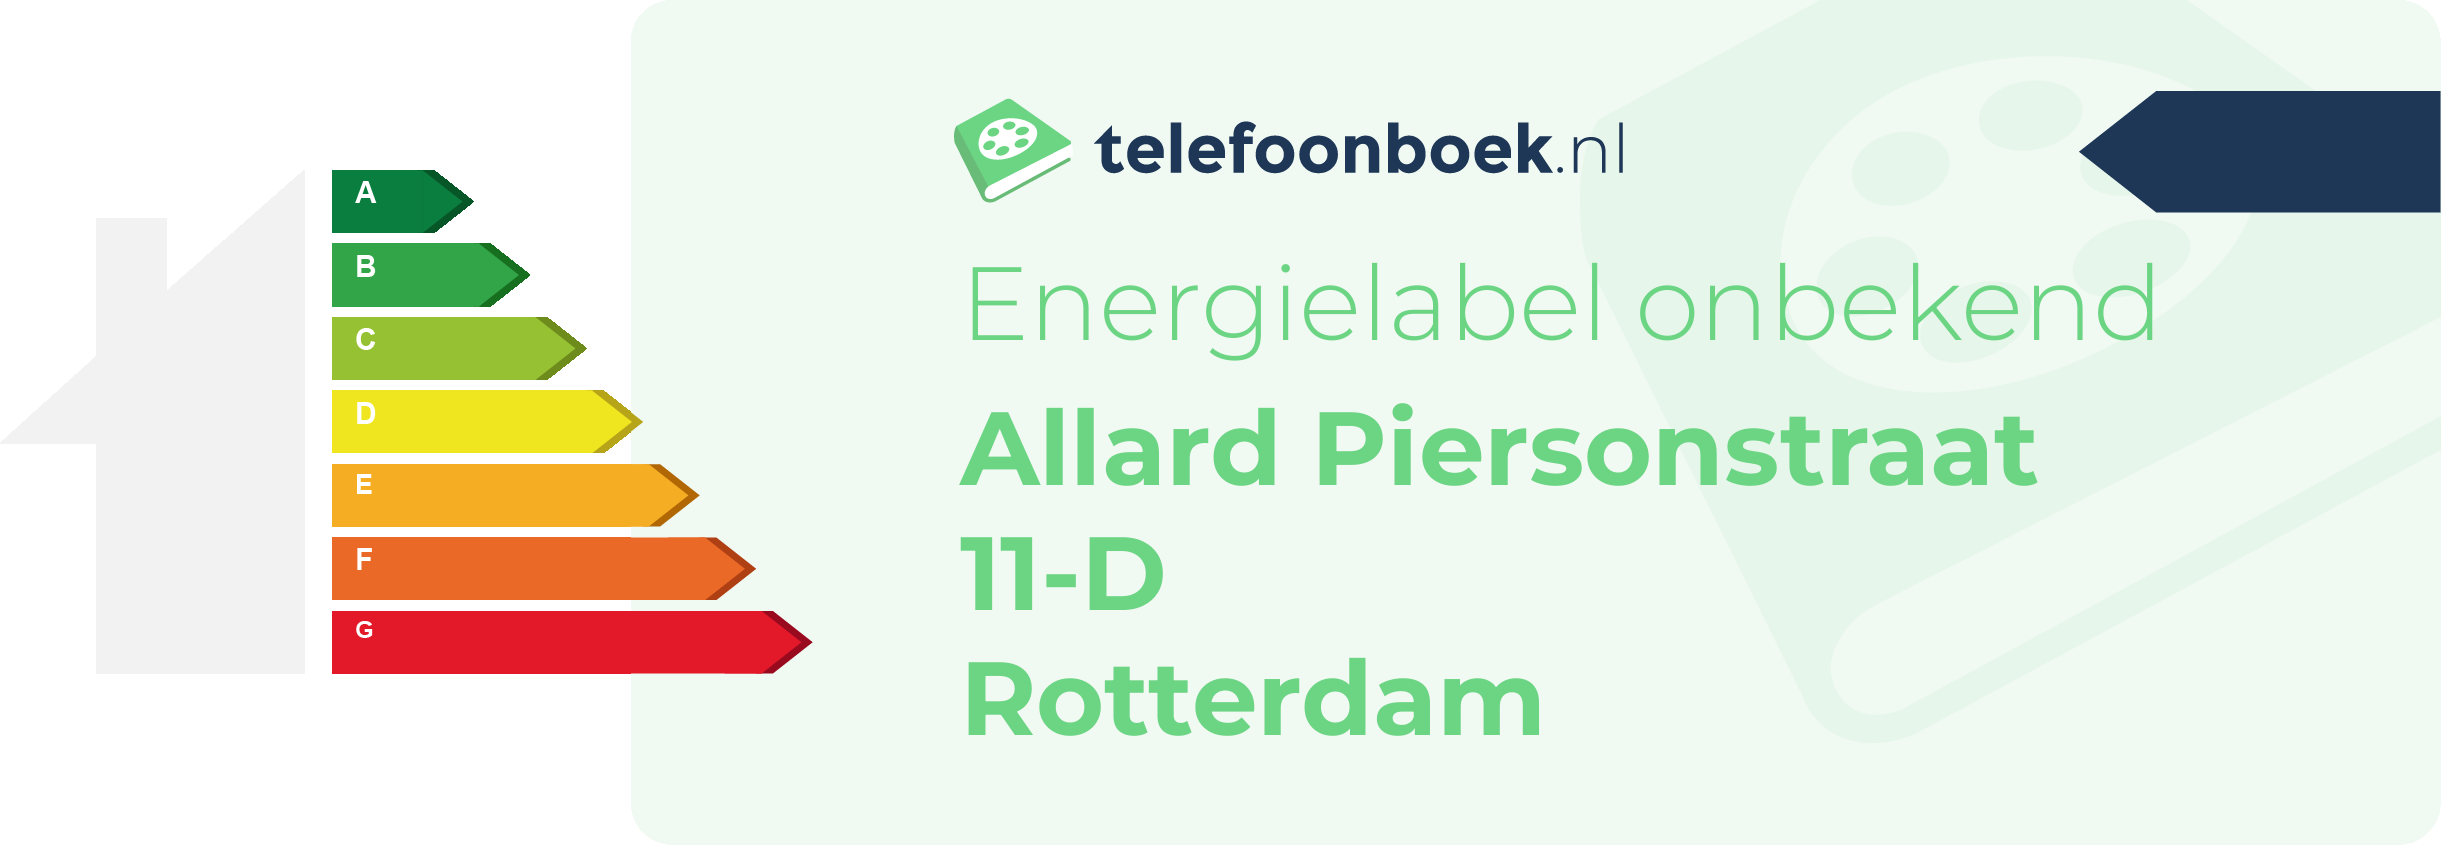 Energielabel Allard Piersonstraat 11-D Rotterdam